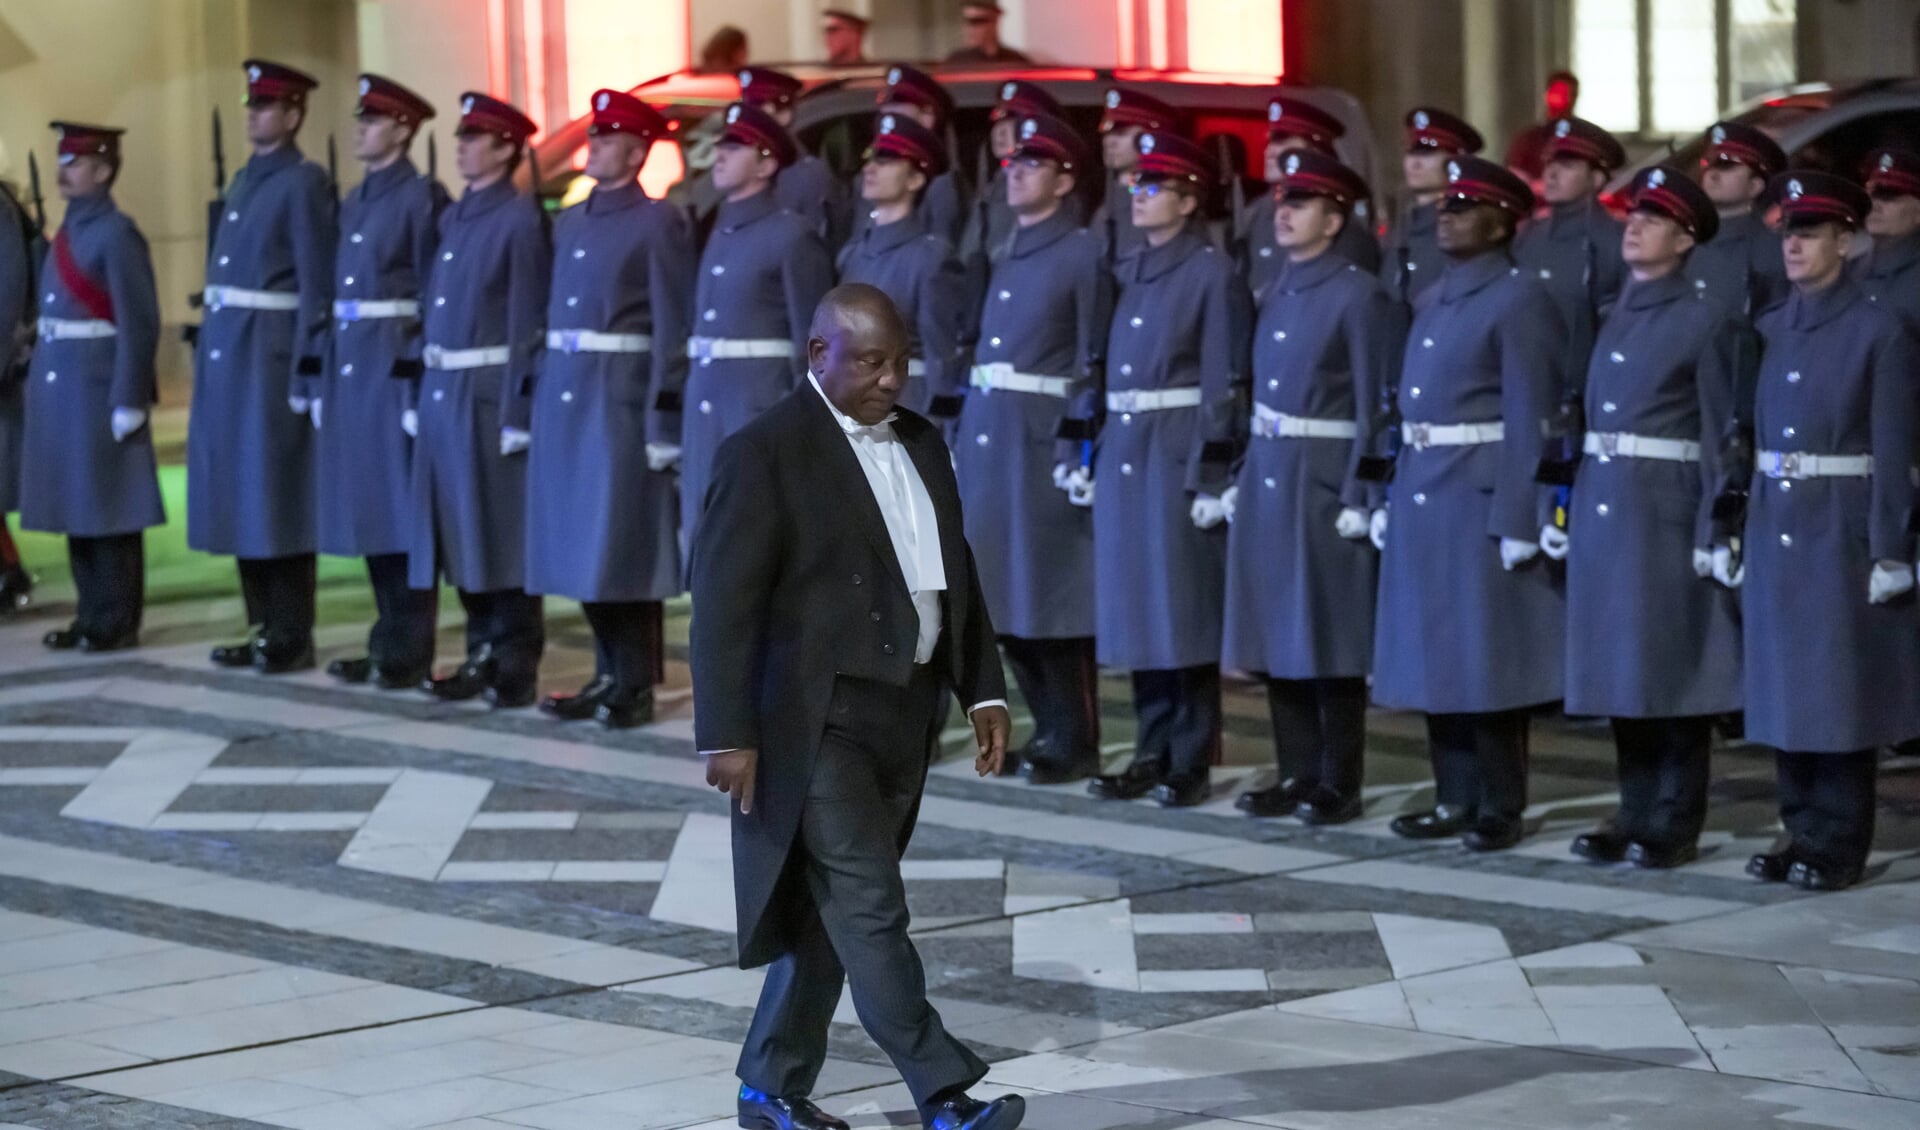 De Zuid-Afrikaanse president Cyril Ramaphosa bezocht eerder deze maand Londen.